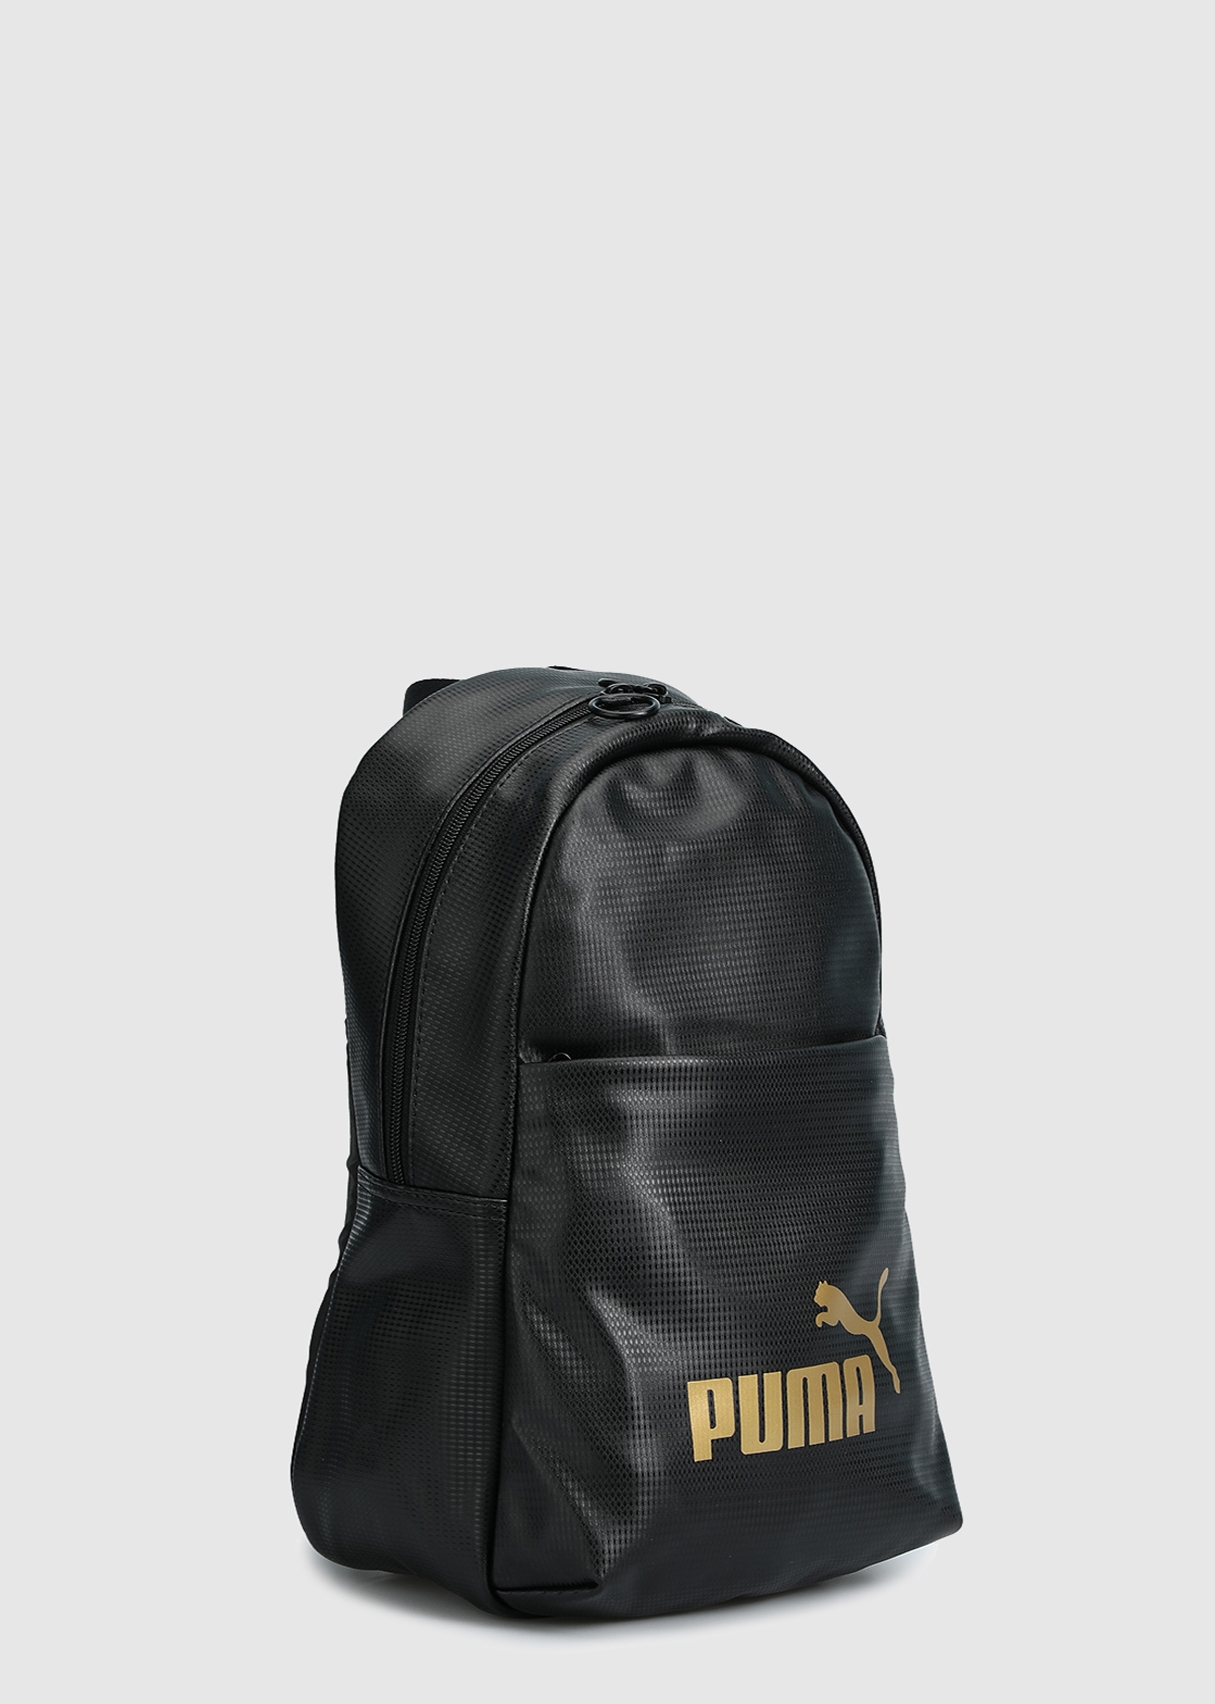 Puma 09027601 Core Up Backpack